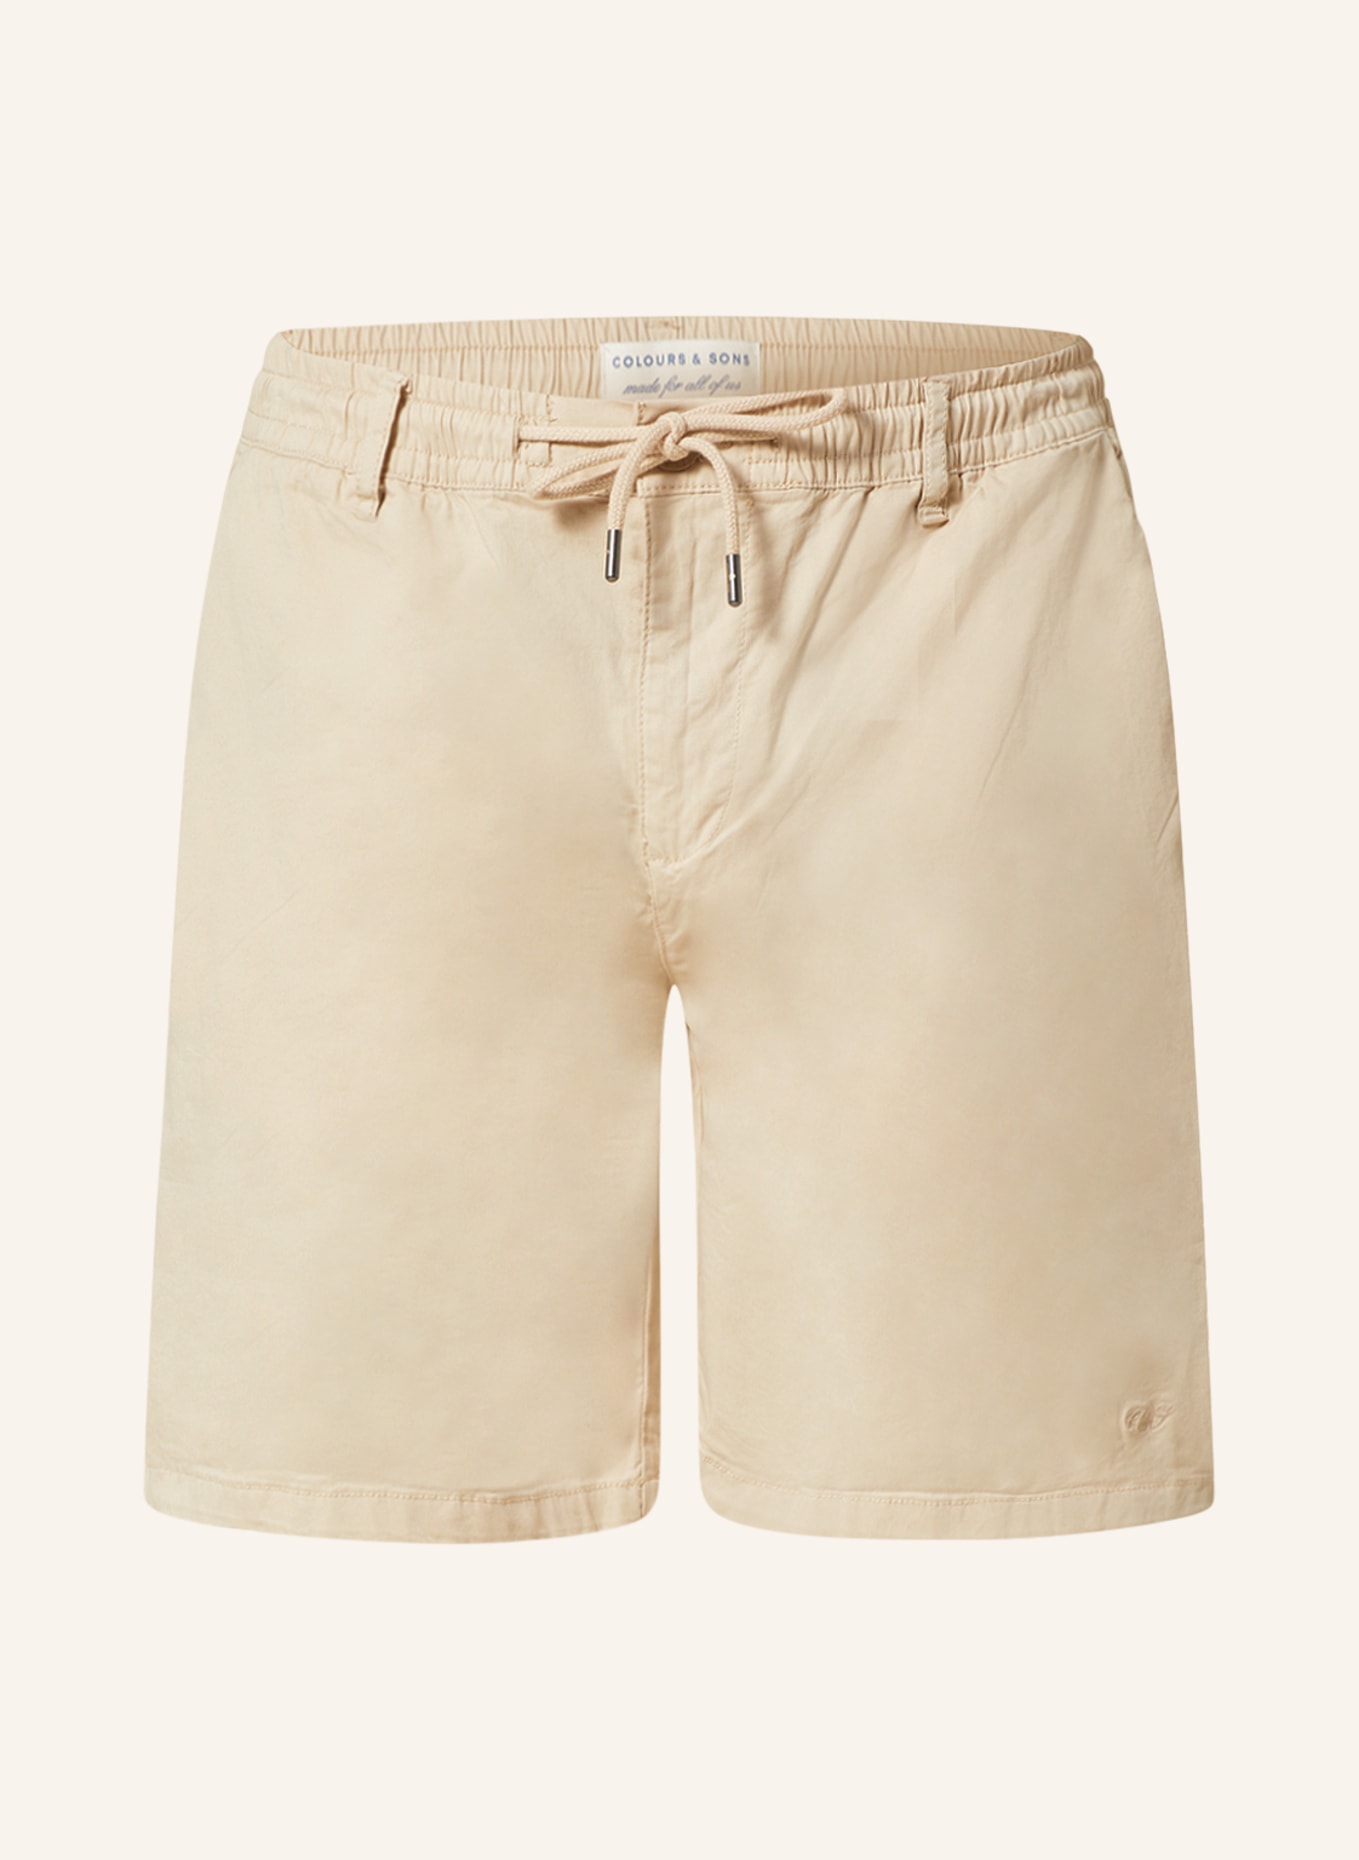 COLOURS & SONS Shorts, Farbe: BEIGE (Bild 1)